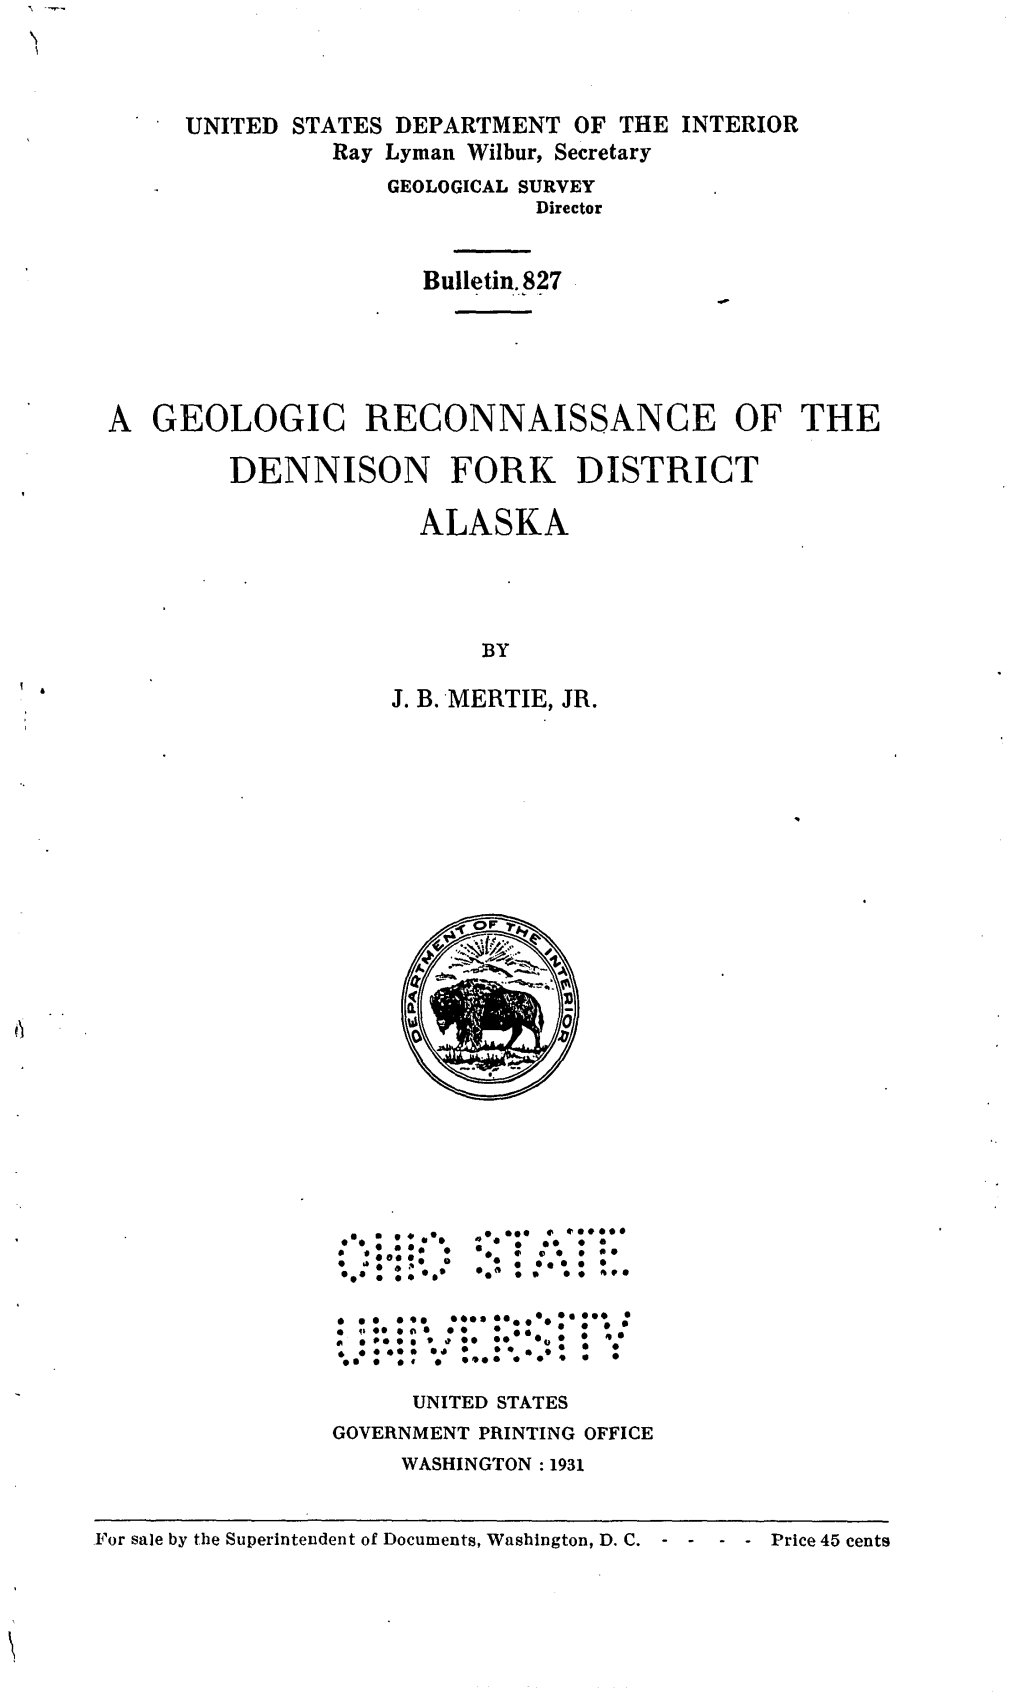 A Geologic Reconnaissance of the Dennison Fork District Alaska